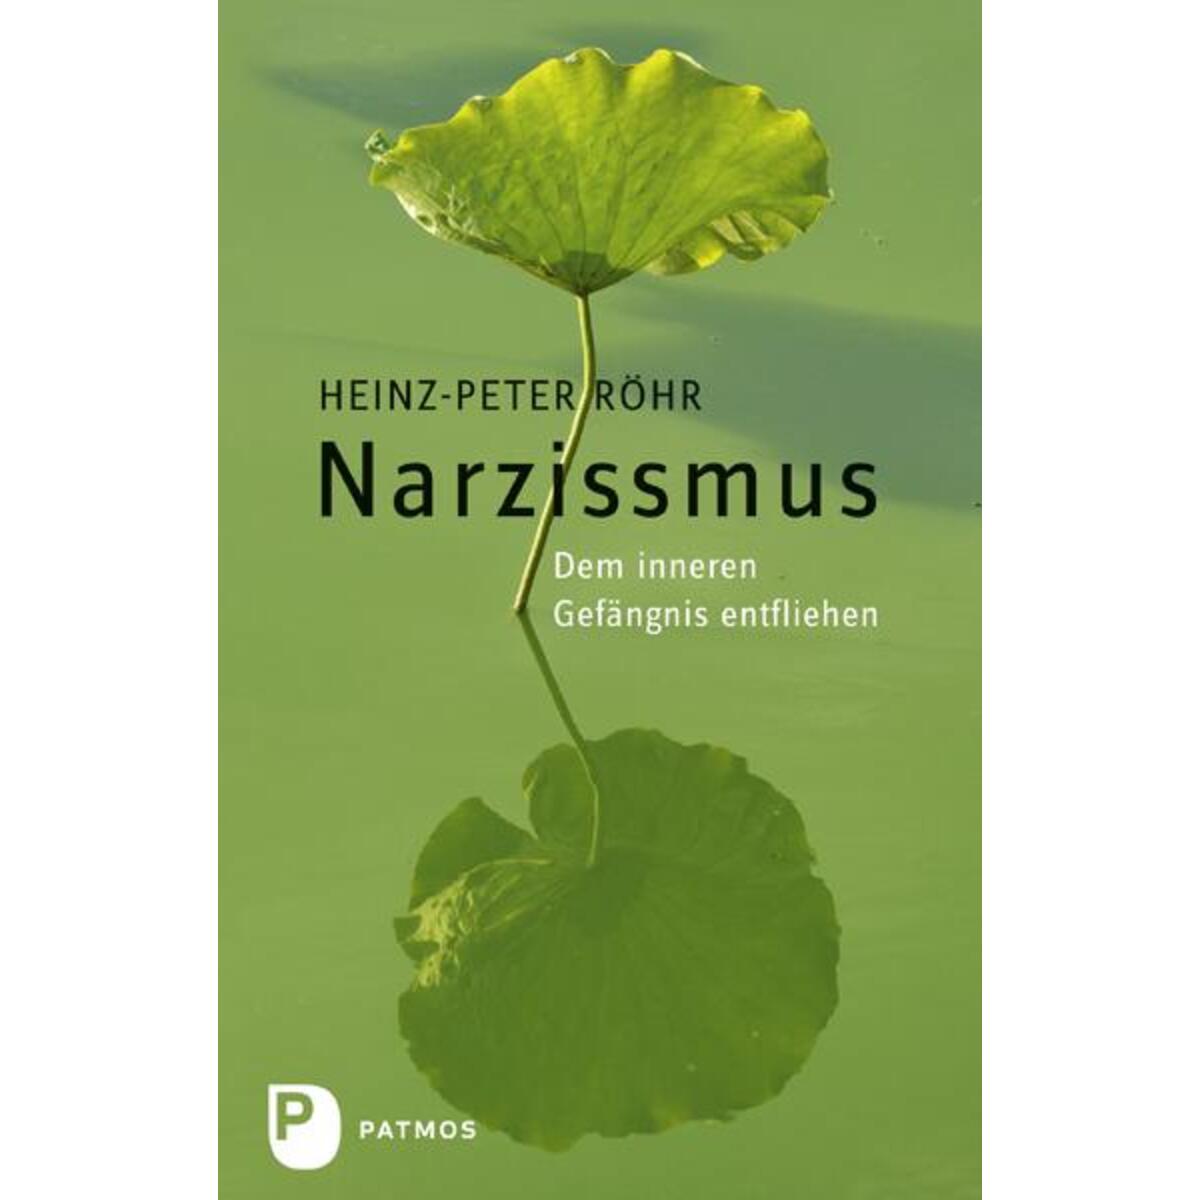 Narzissmus von Patmos-Verlag